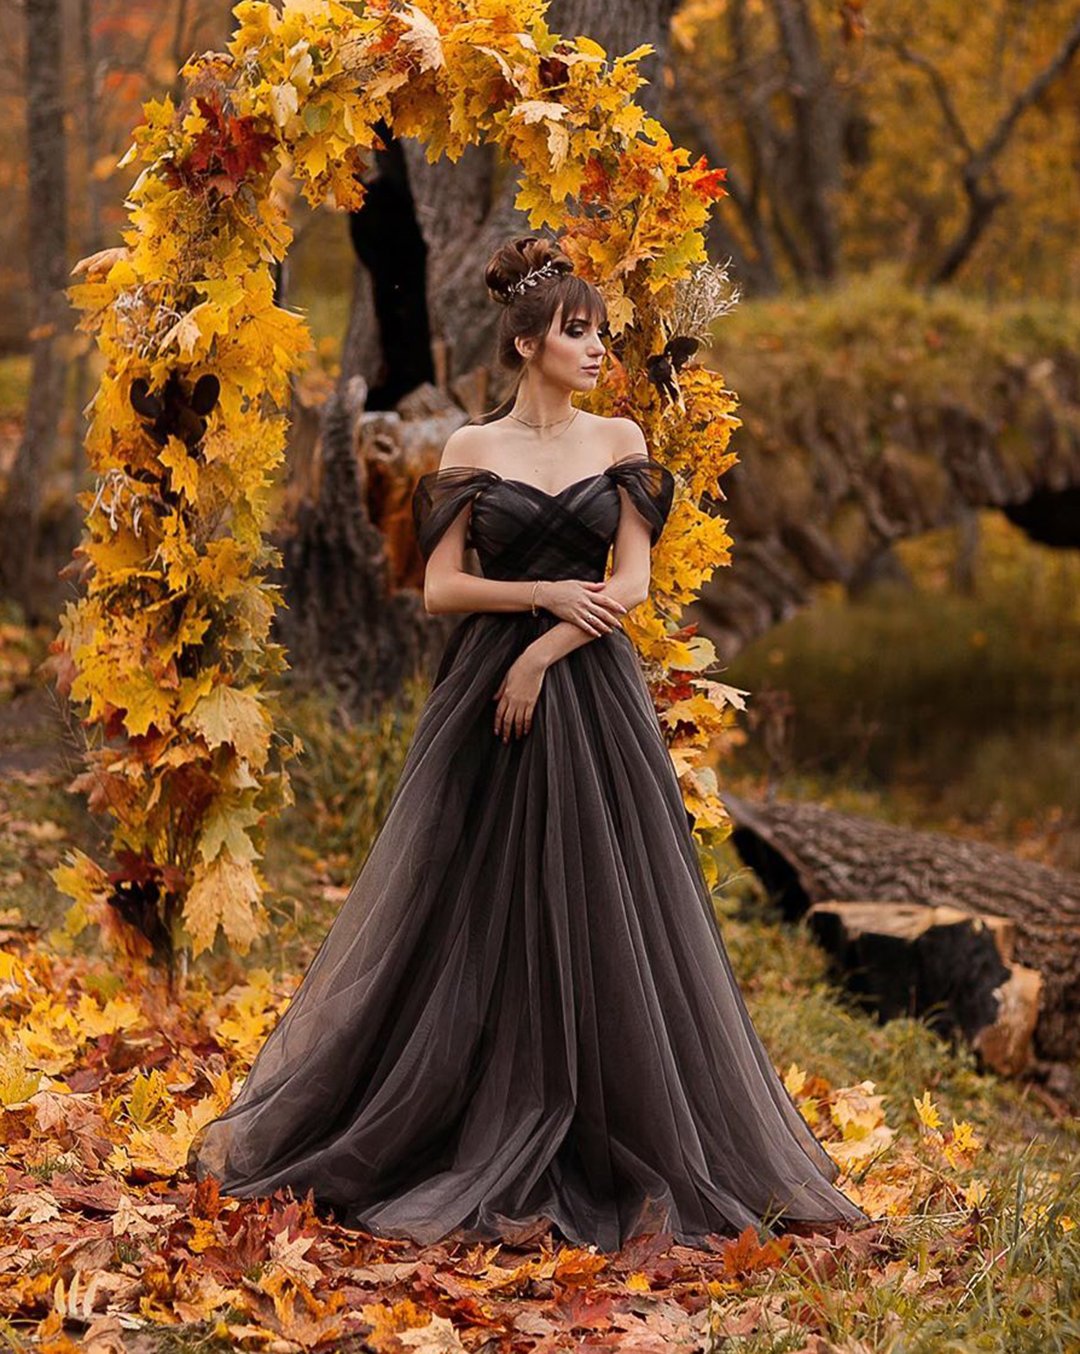 Unique Black Wedding Dresses